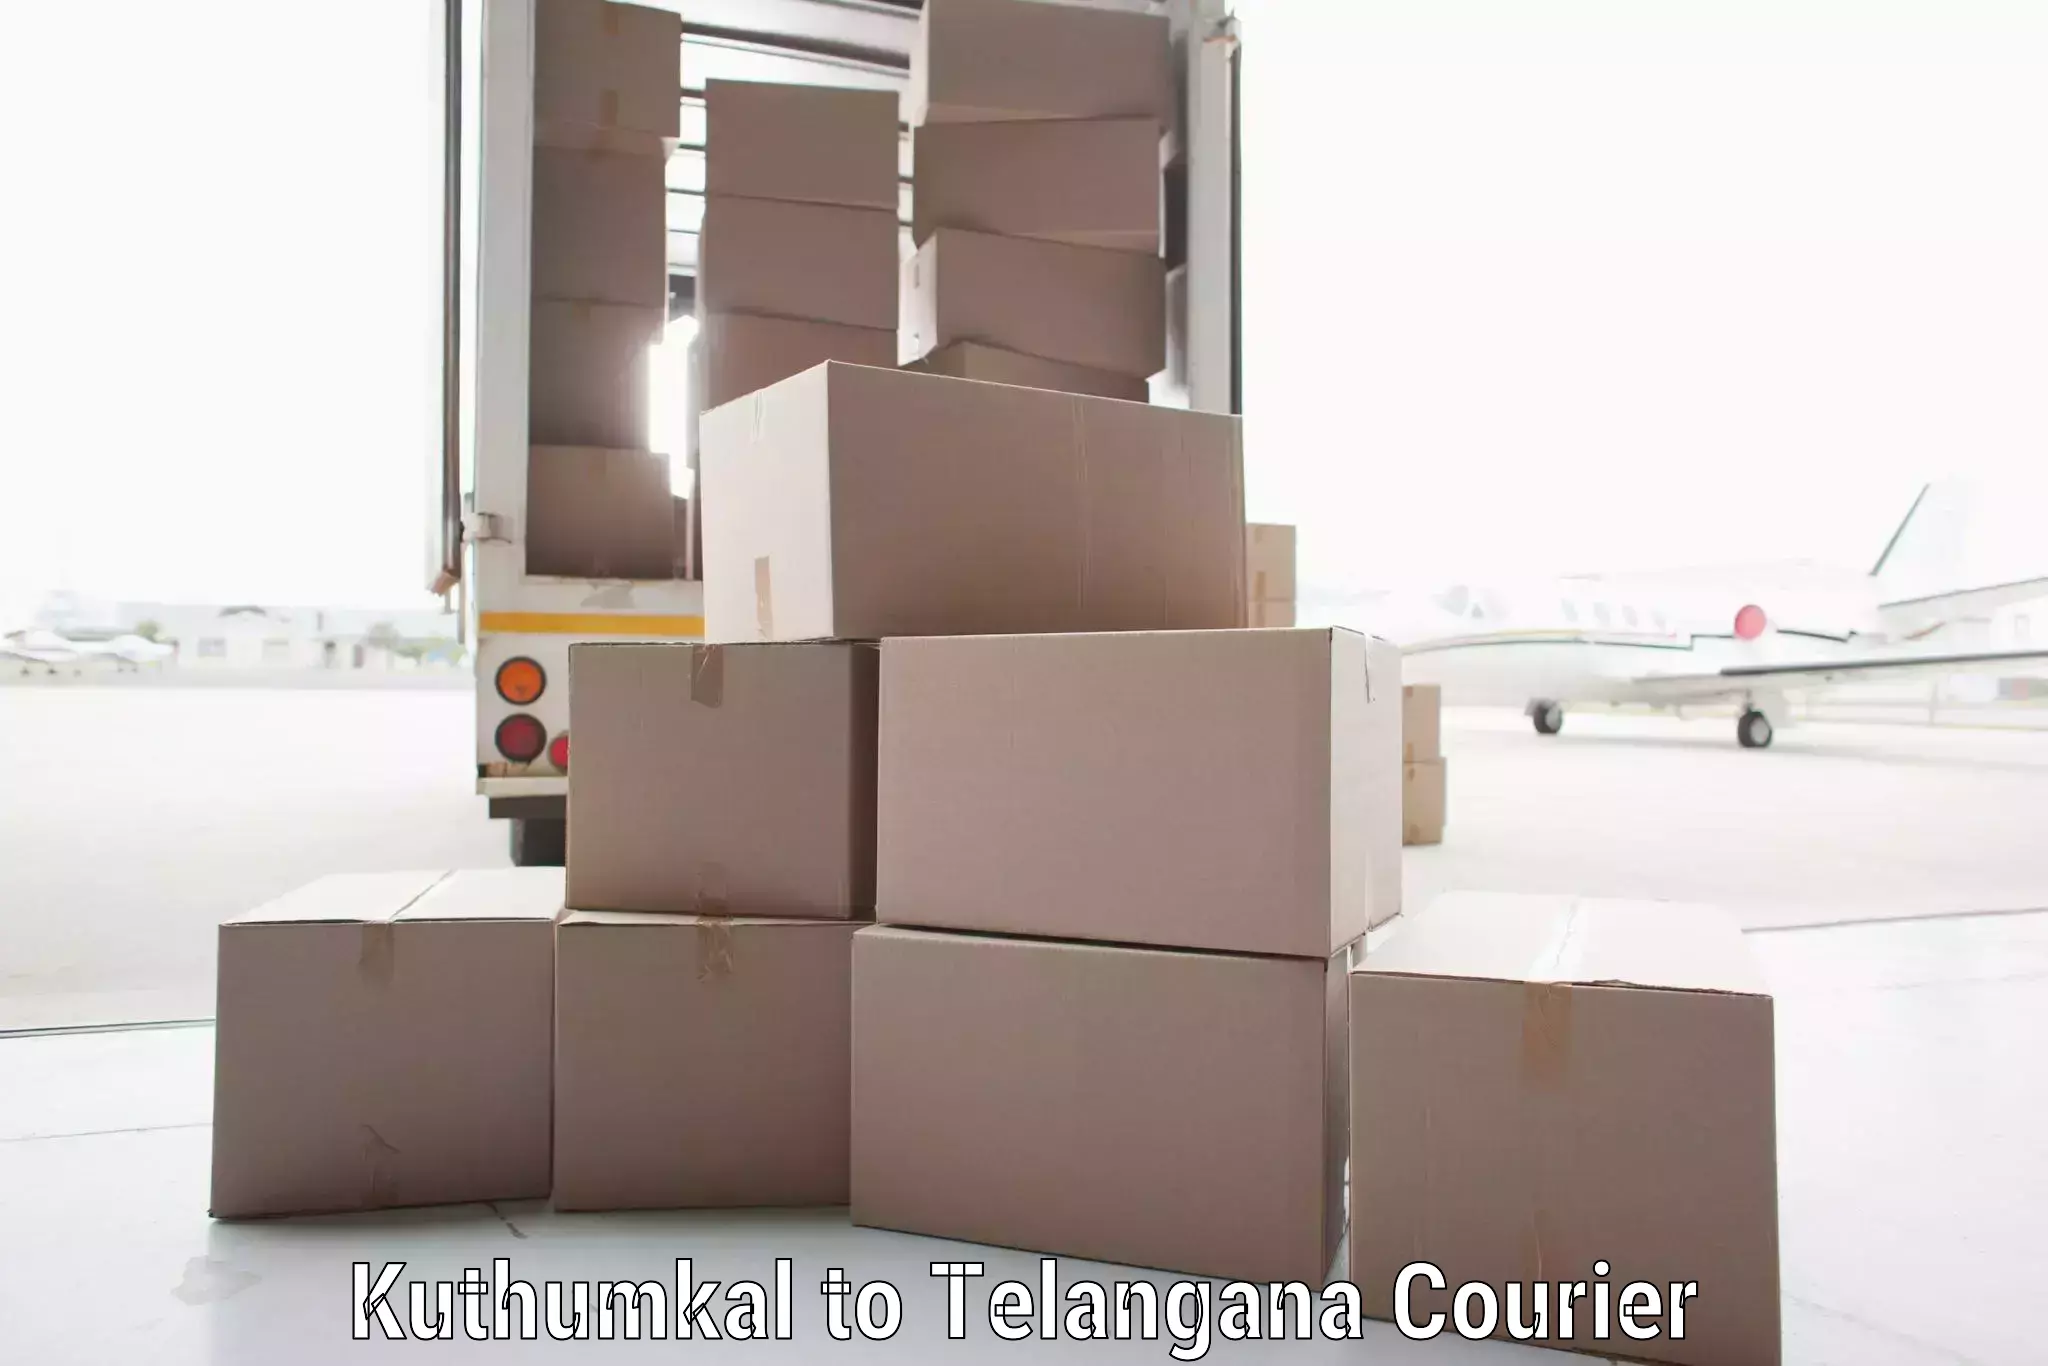 Enhanced delivery experience Kuthumkal to Telangana